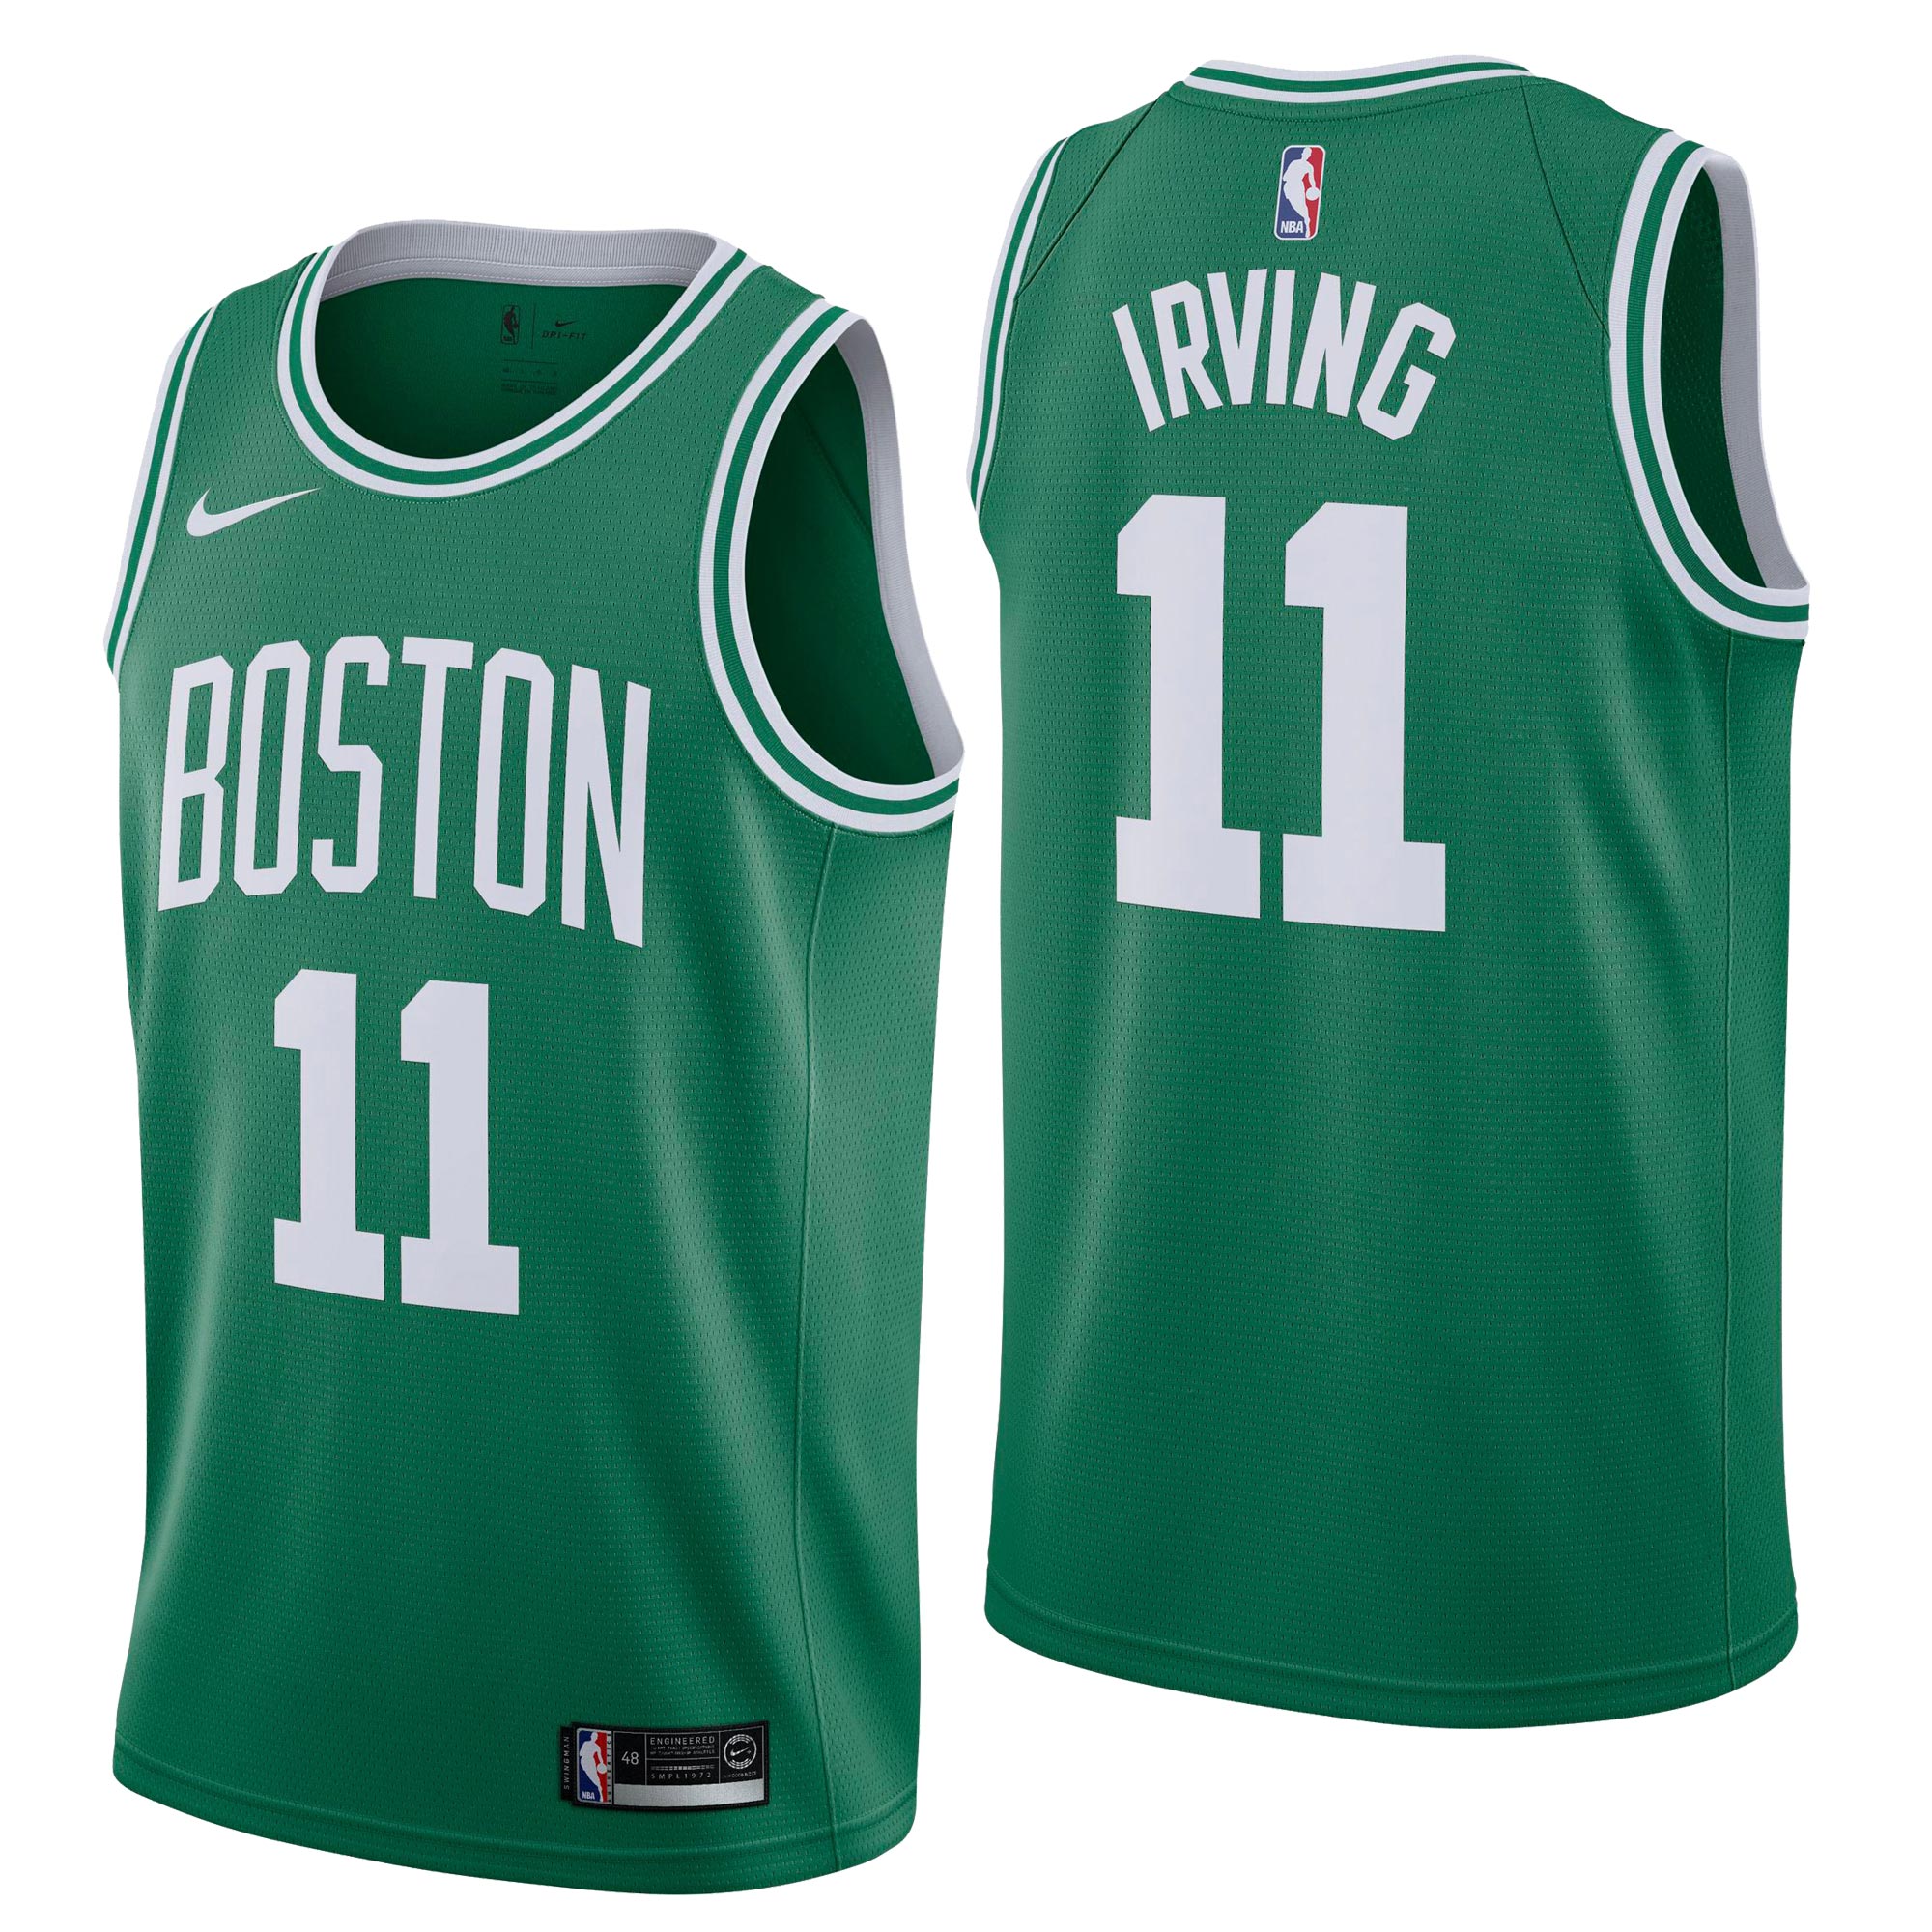 "Boston Celtics Nike Icon Swingman Jersey - Kyrie Irving - Mens"